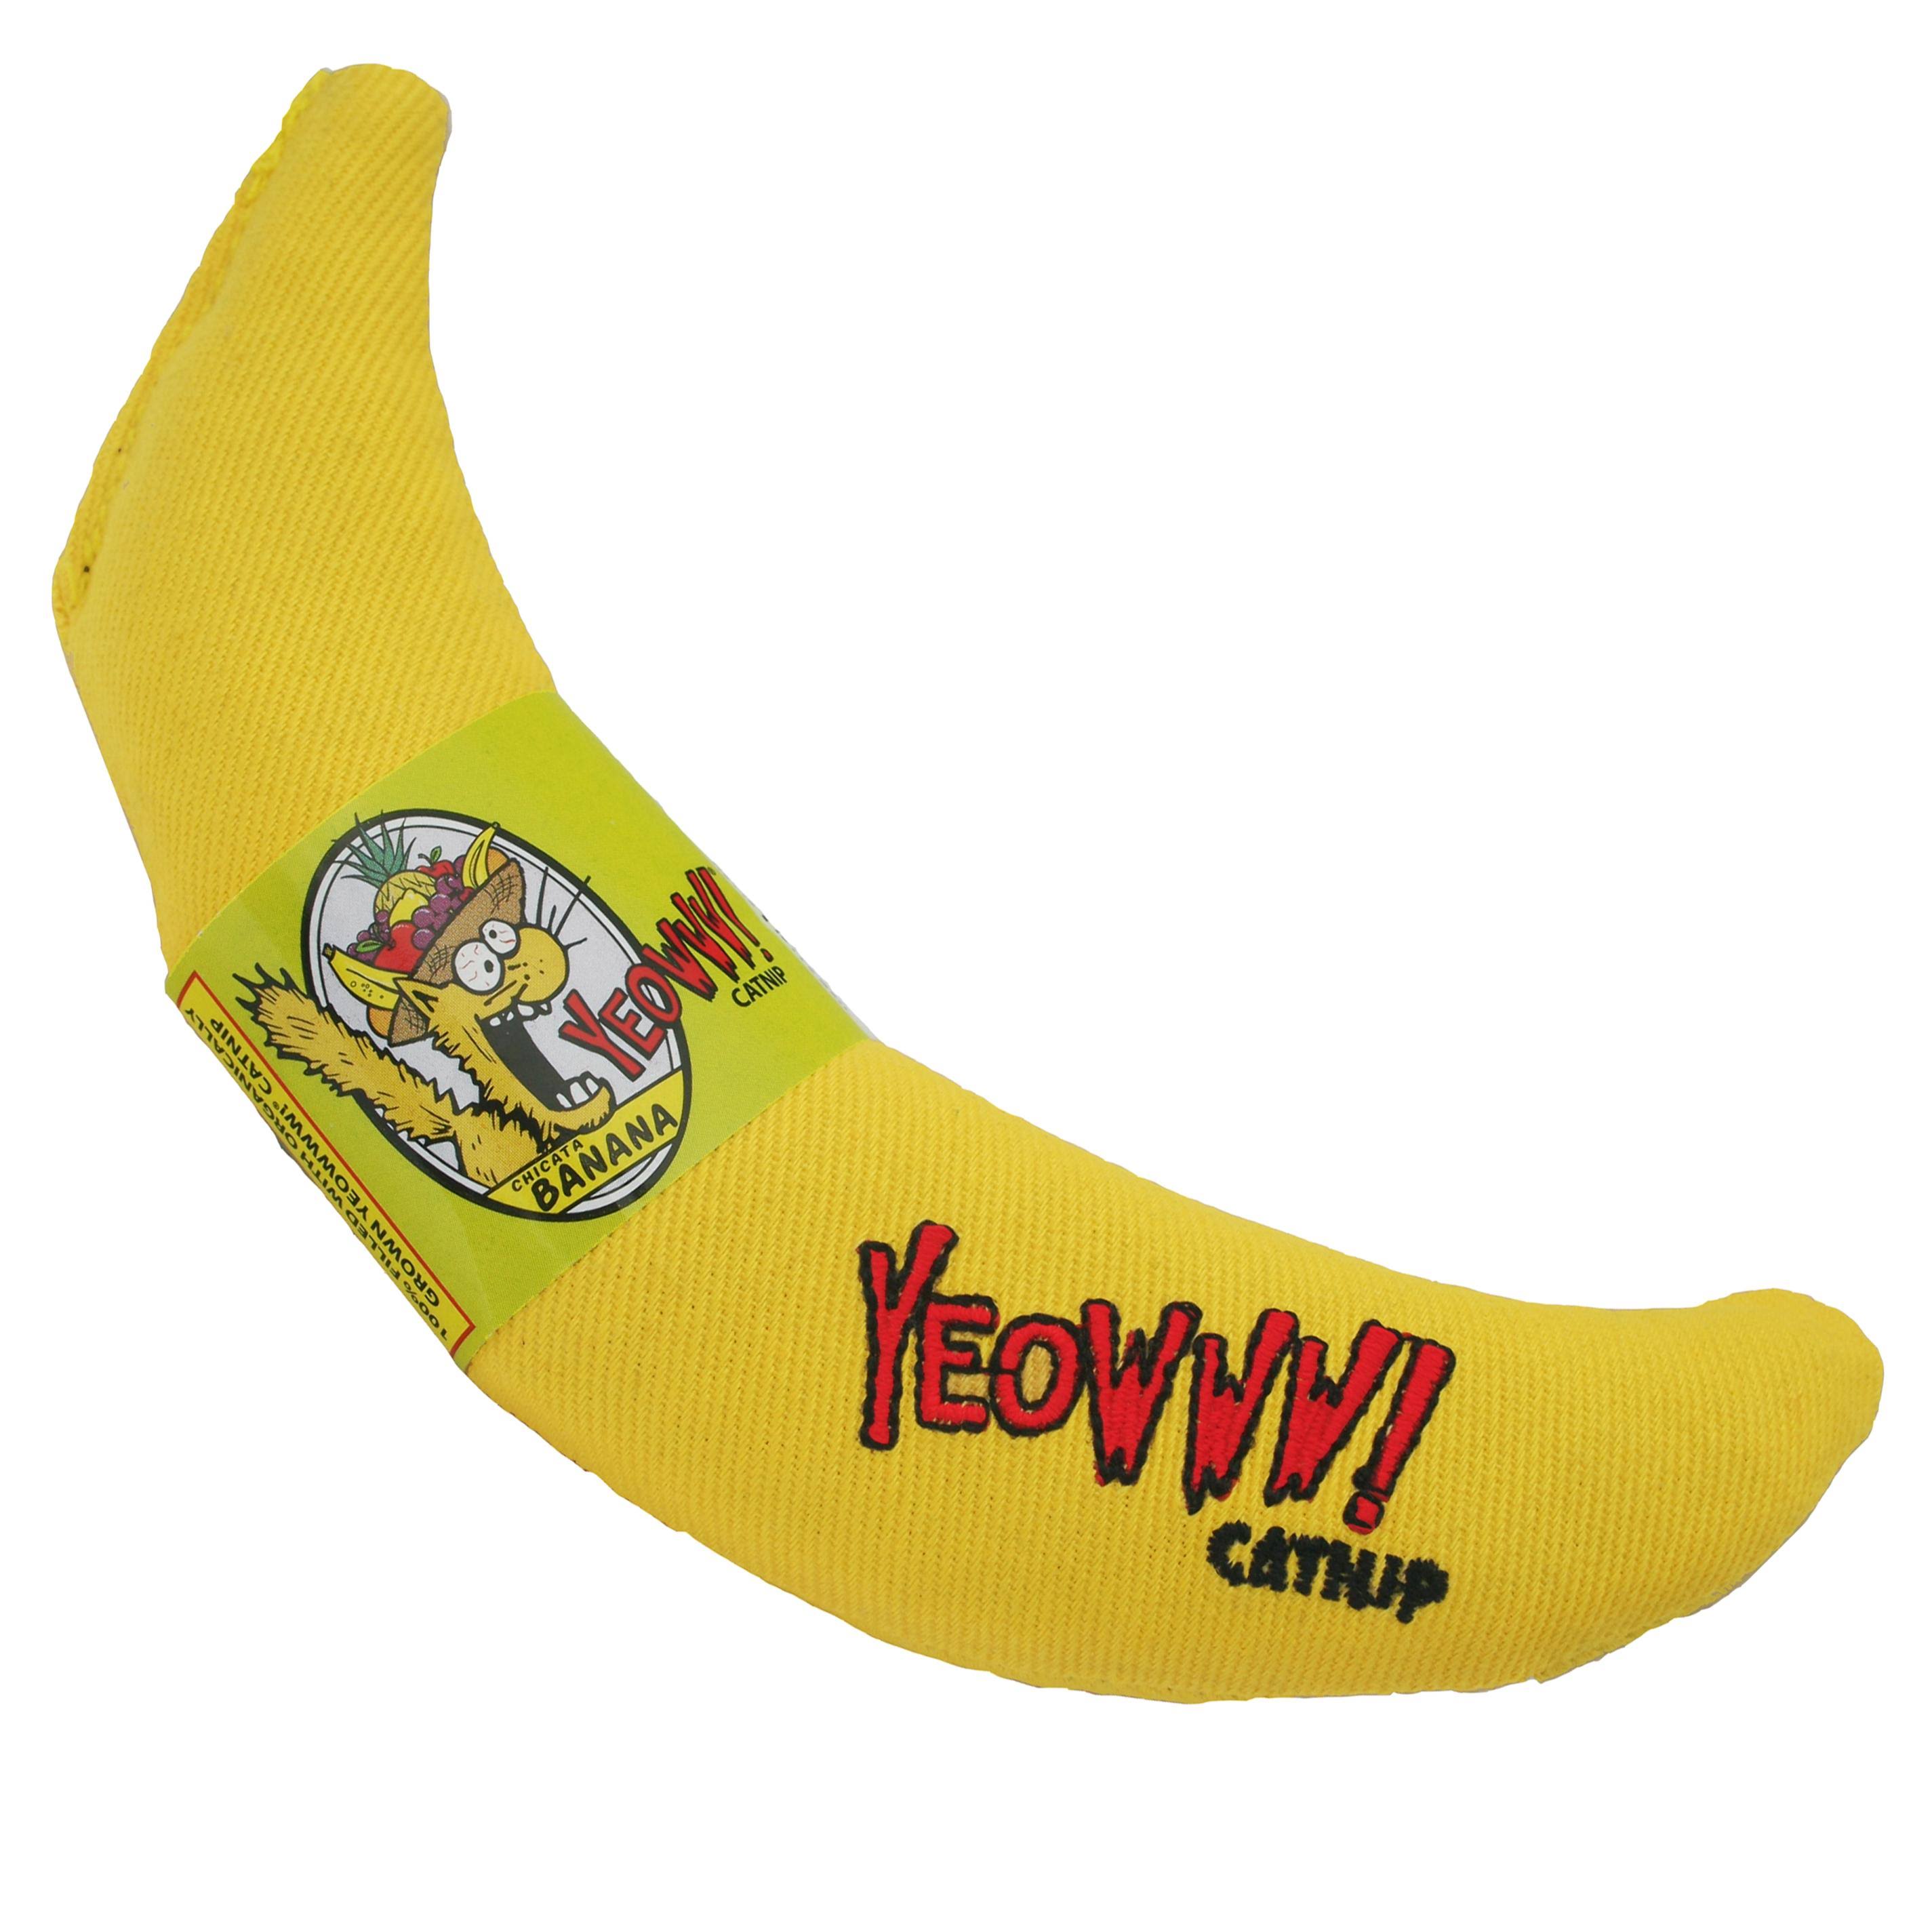 DuckyWorld Yeowww Banana Catnip Toy - Yellow